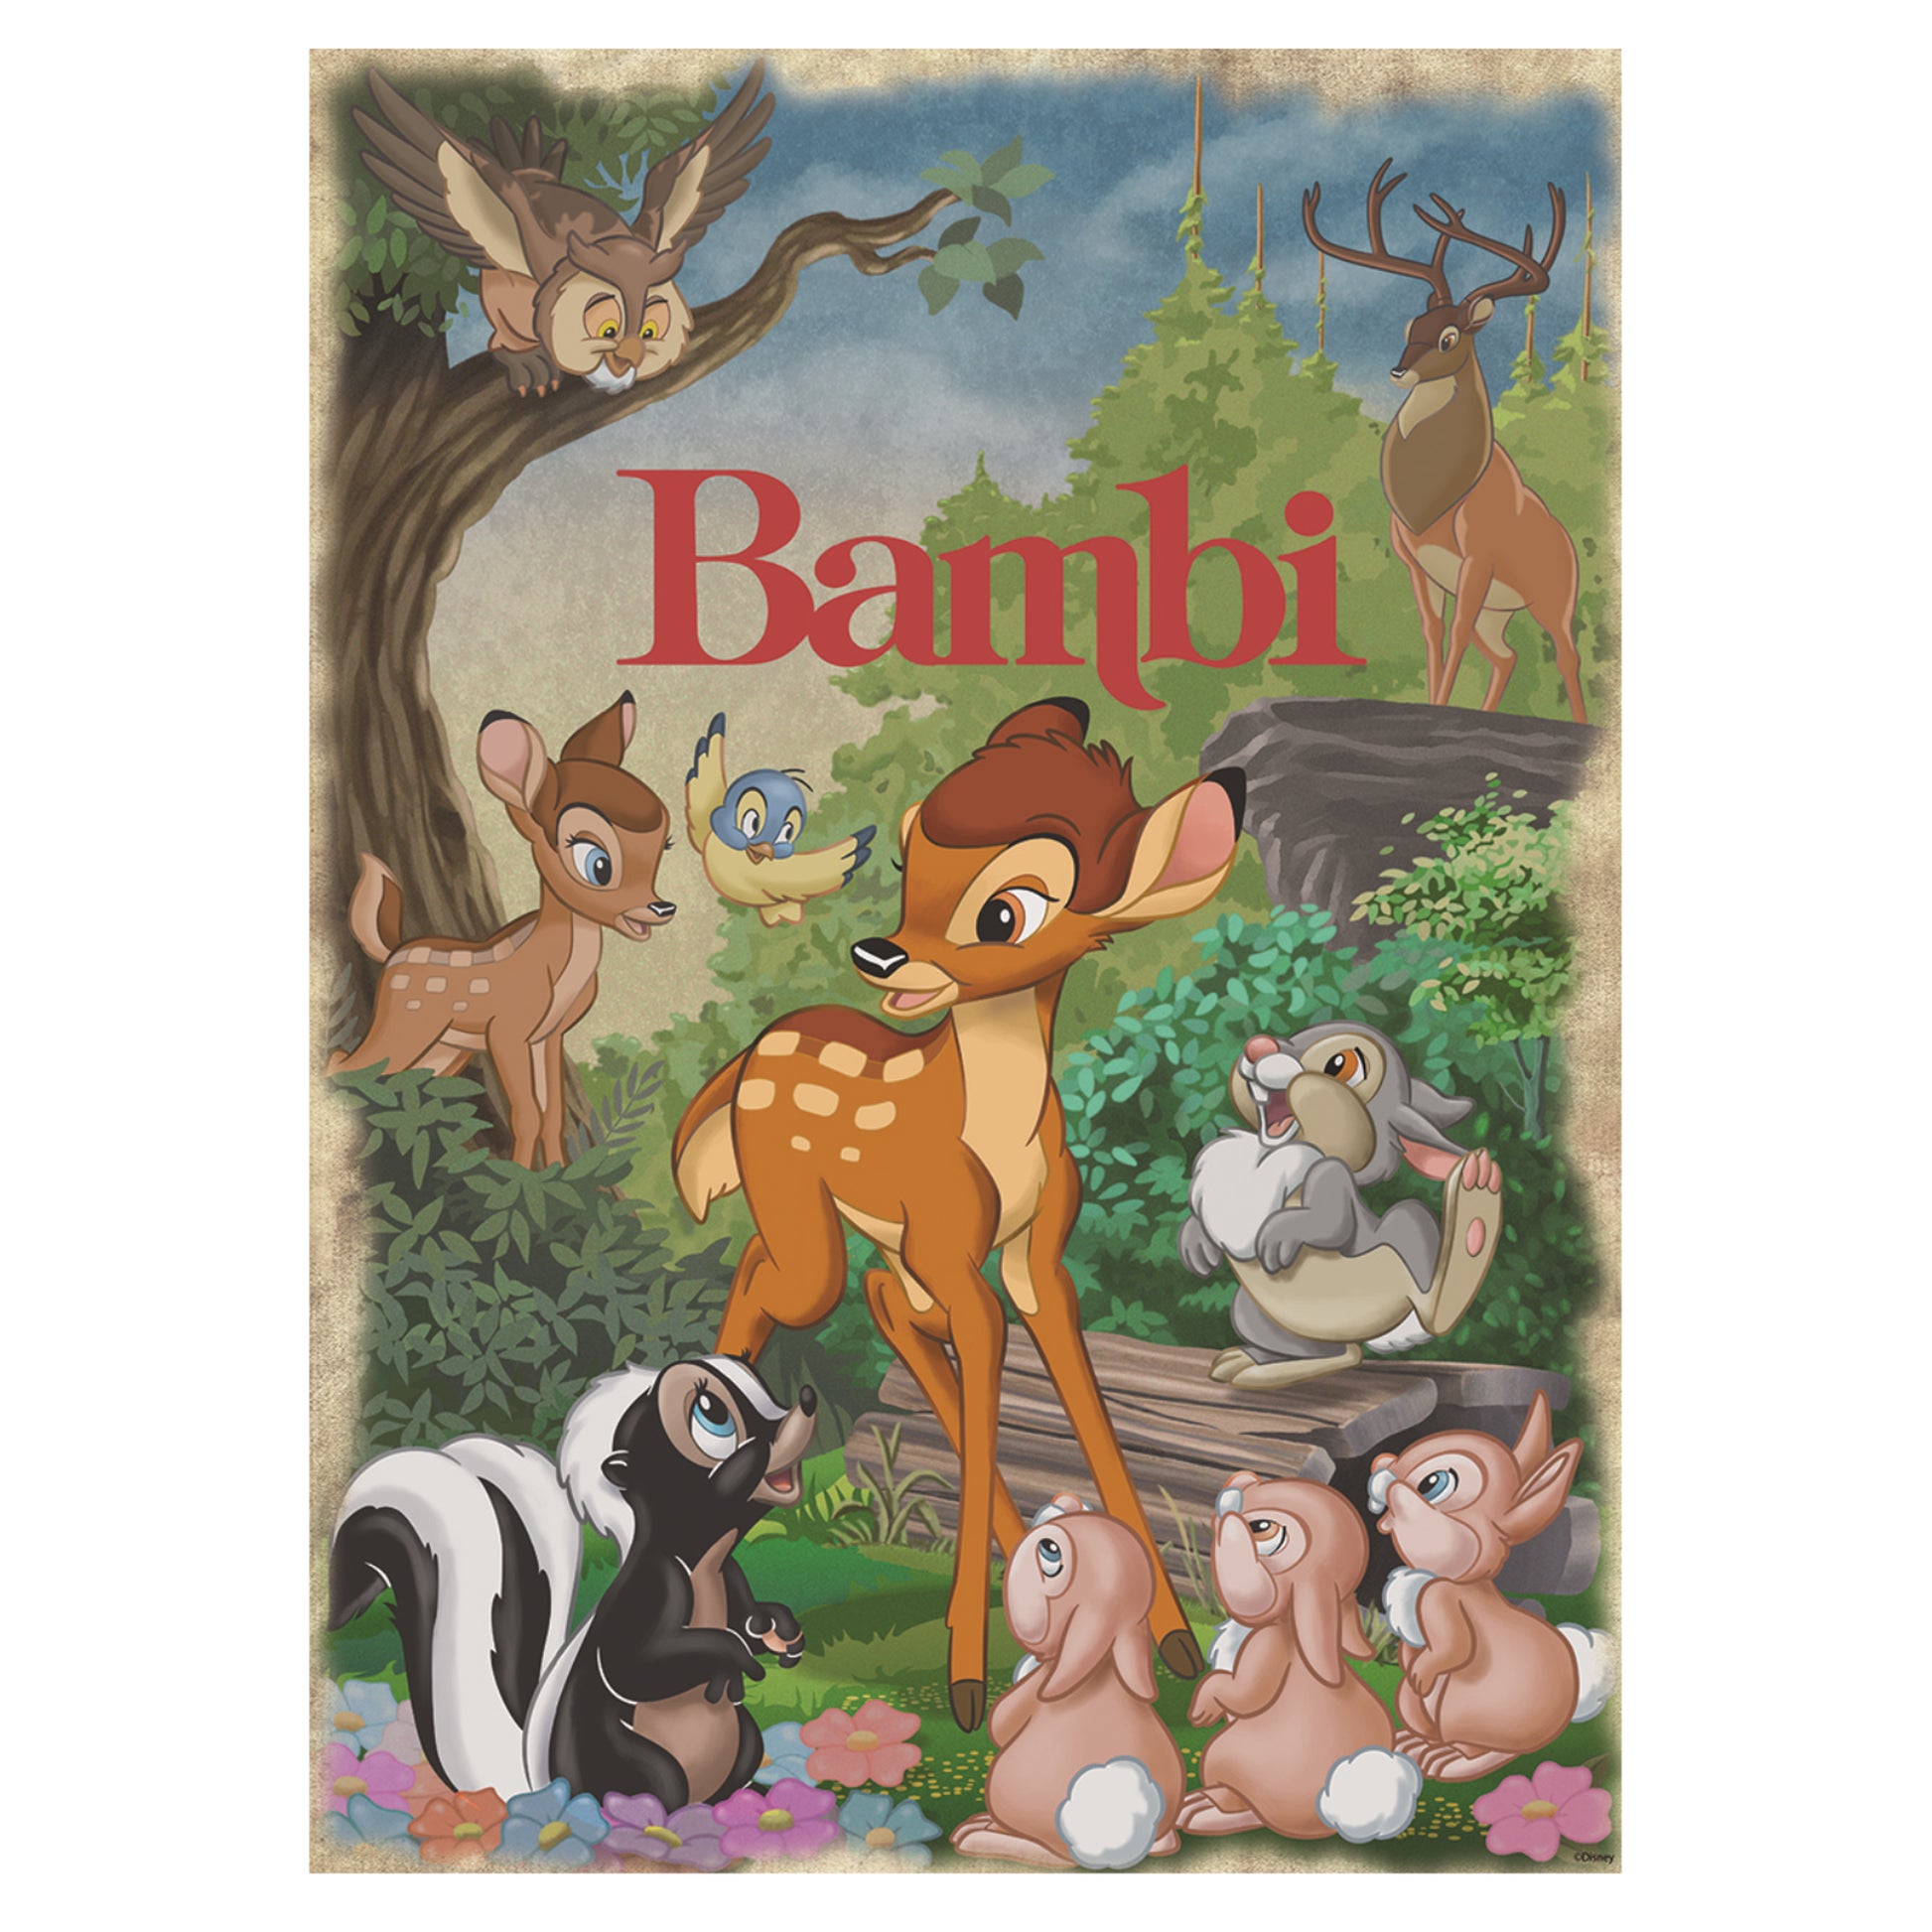 **Disney Classic Movie Poster Puzzle Bambi 1000pcs - product image - Jumboplay.com